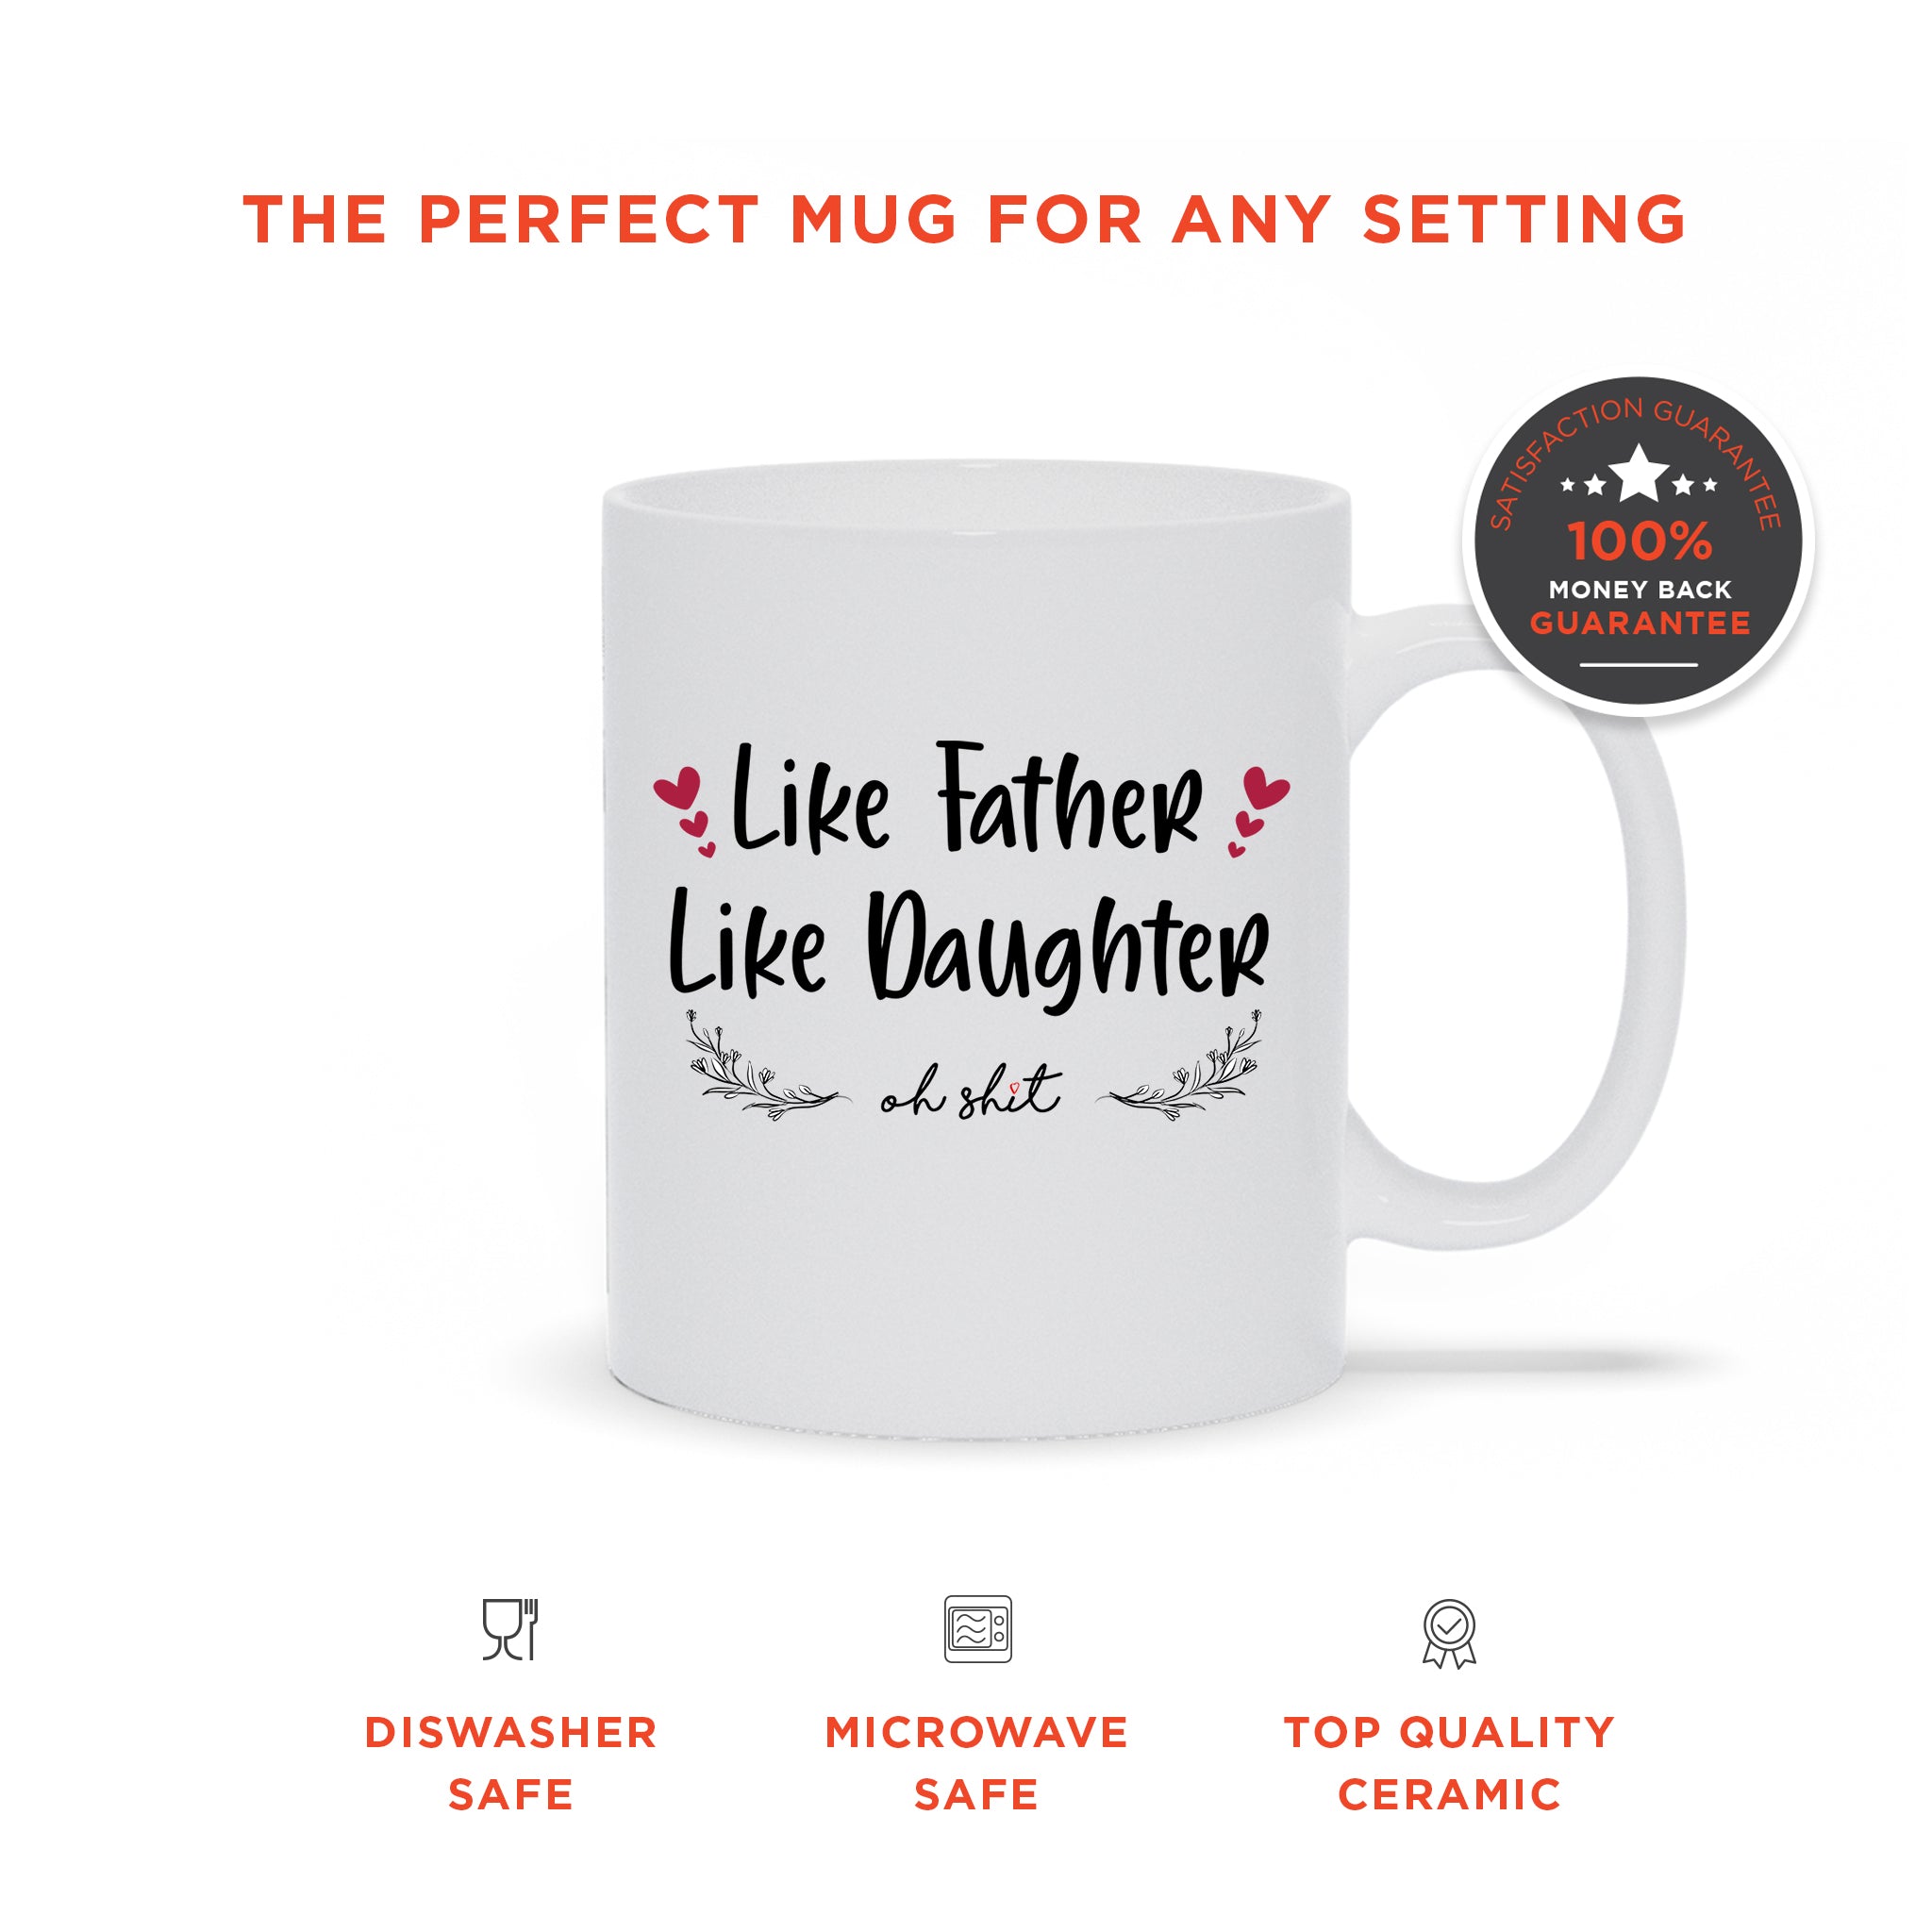 Like Father Like Daughter - Hilarious Father's Day Mug